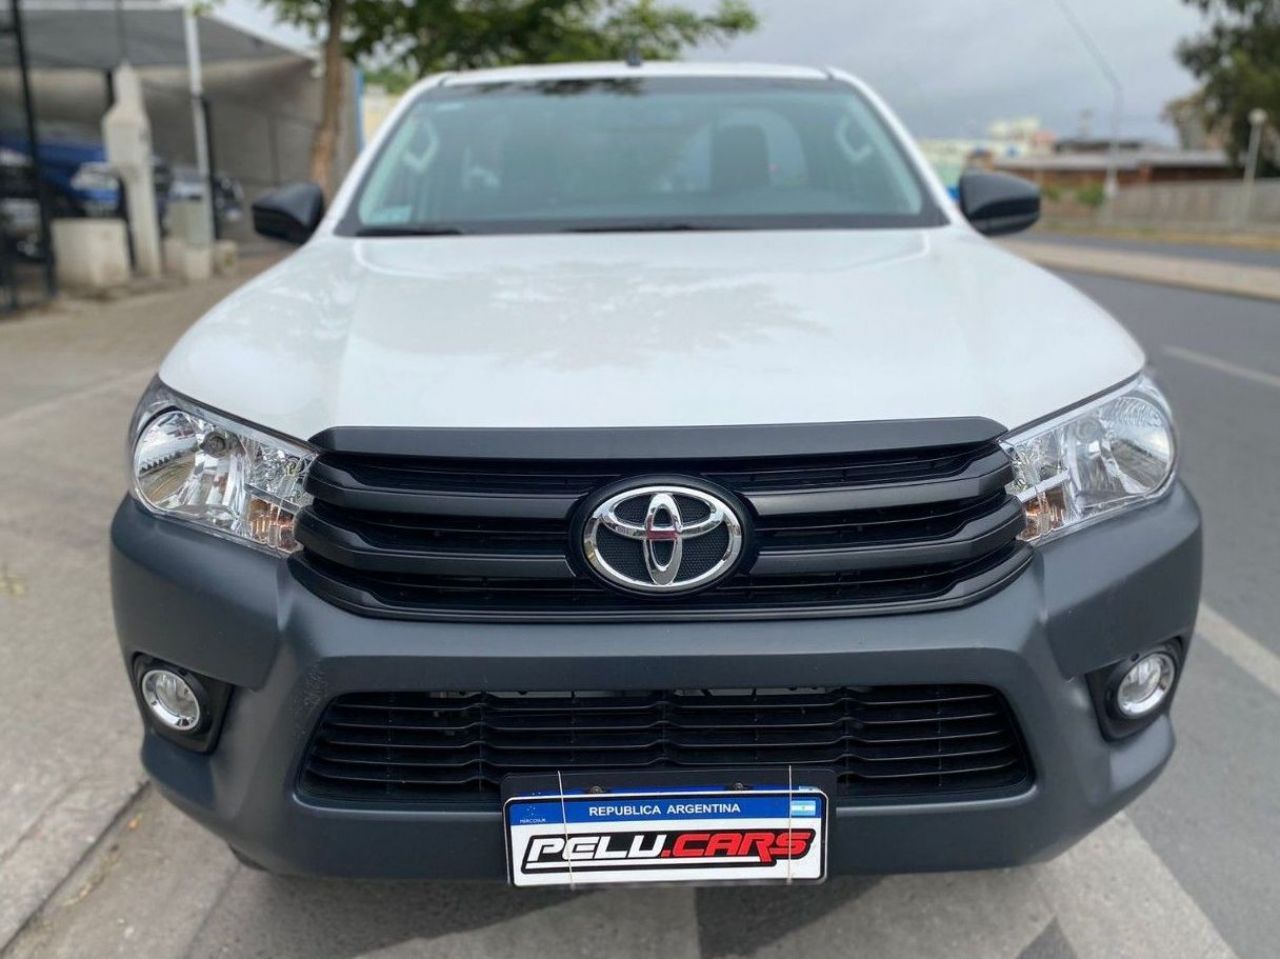 Toyota Hilux Usada en San Juan, deRuedas